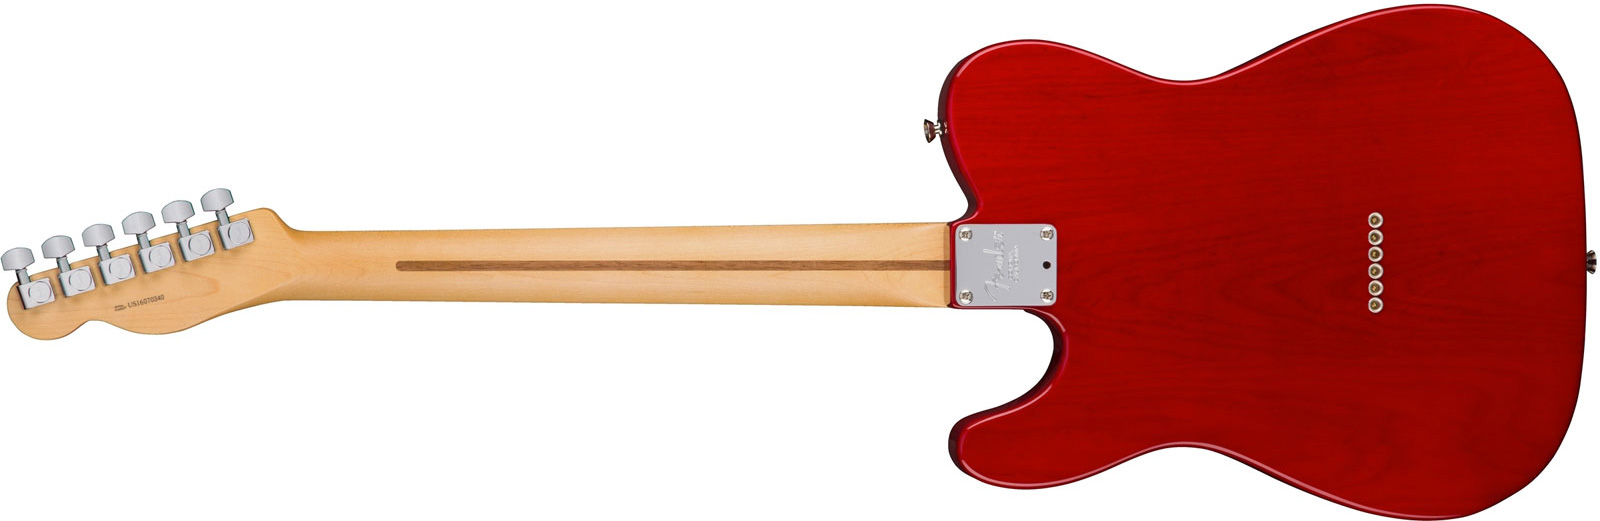 Fender Tele American Professional 2s Usa Rw - Crimson Red Transparent - E-Gitarre in Str-Form - Variation 1